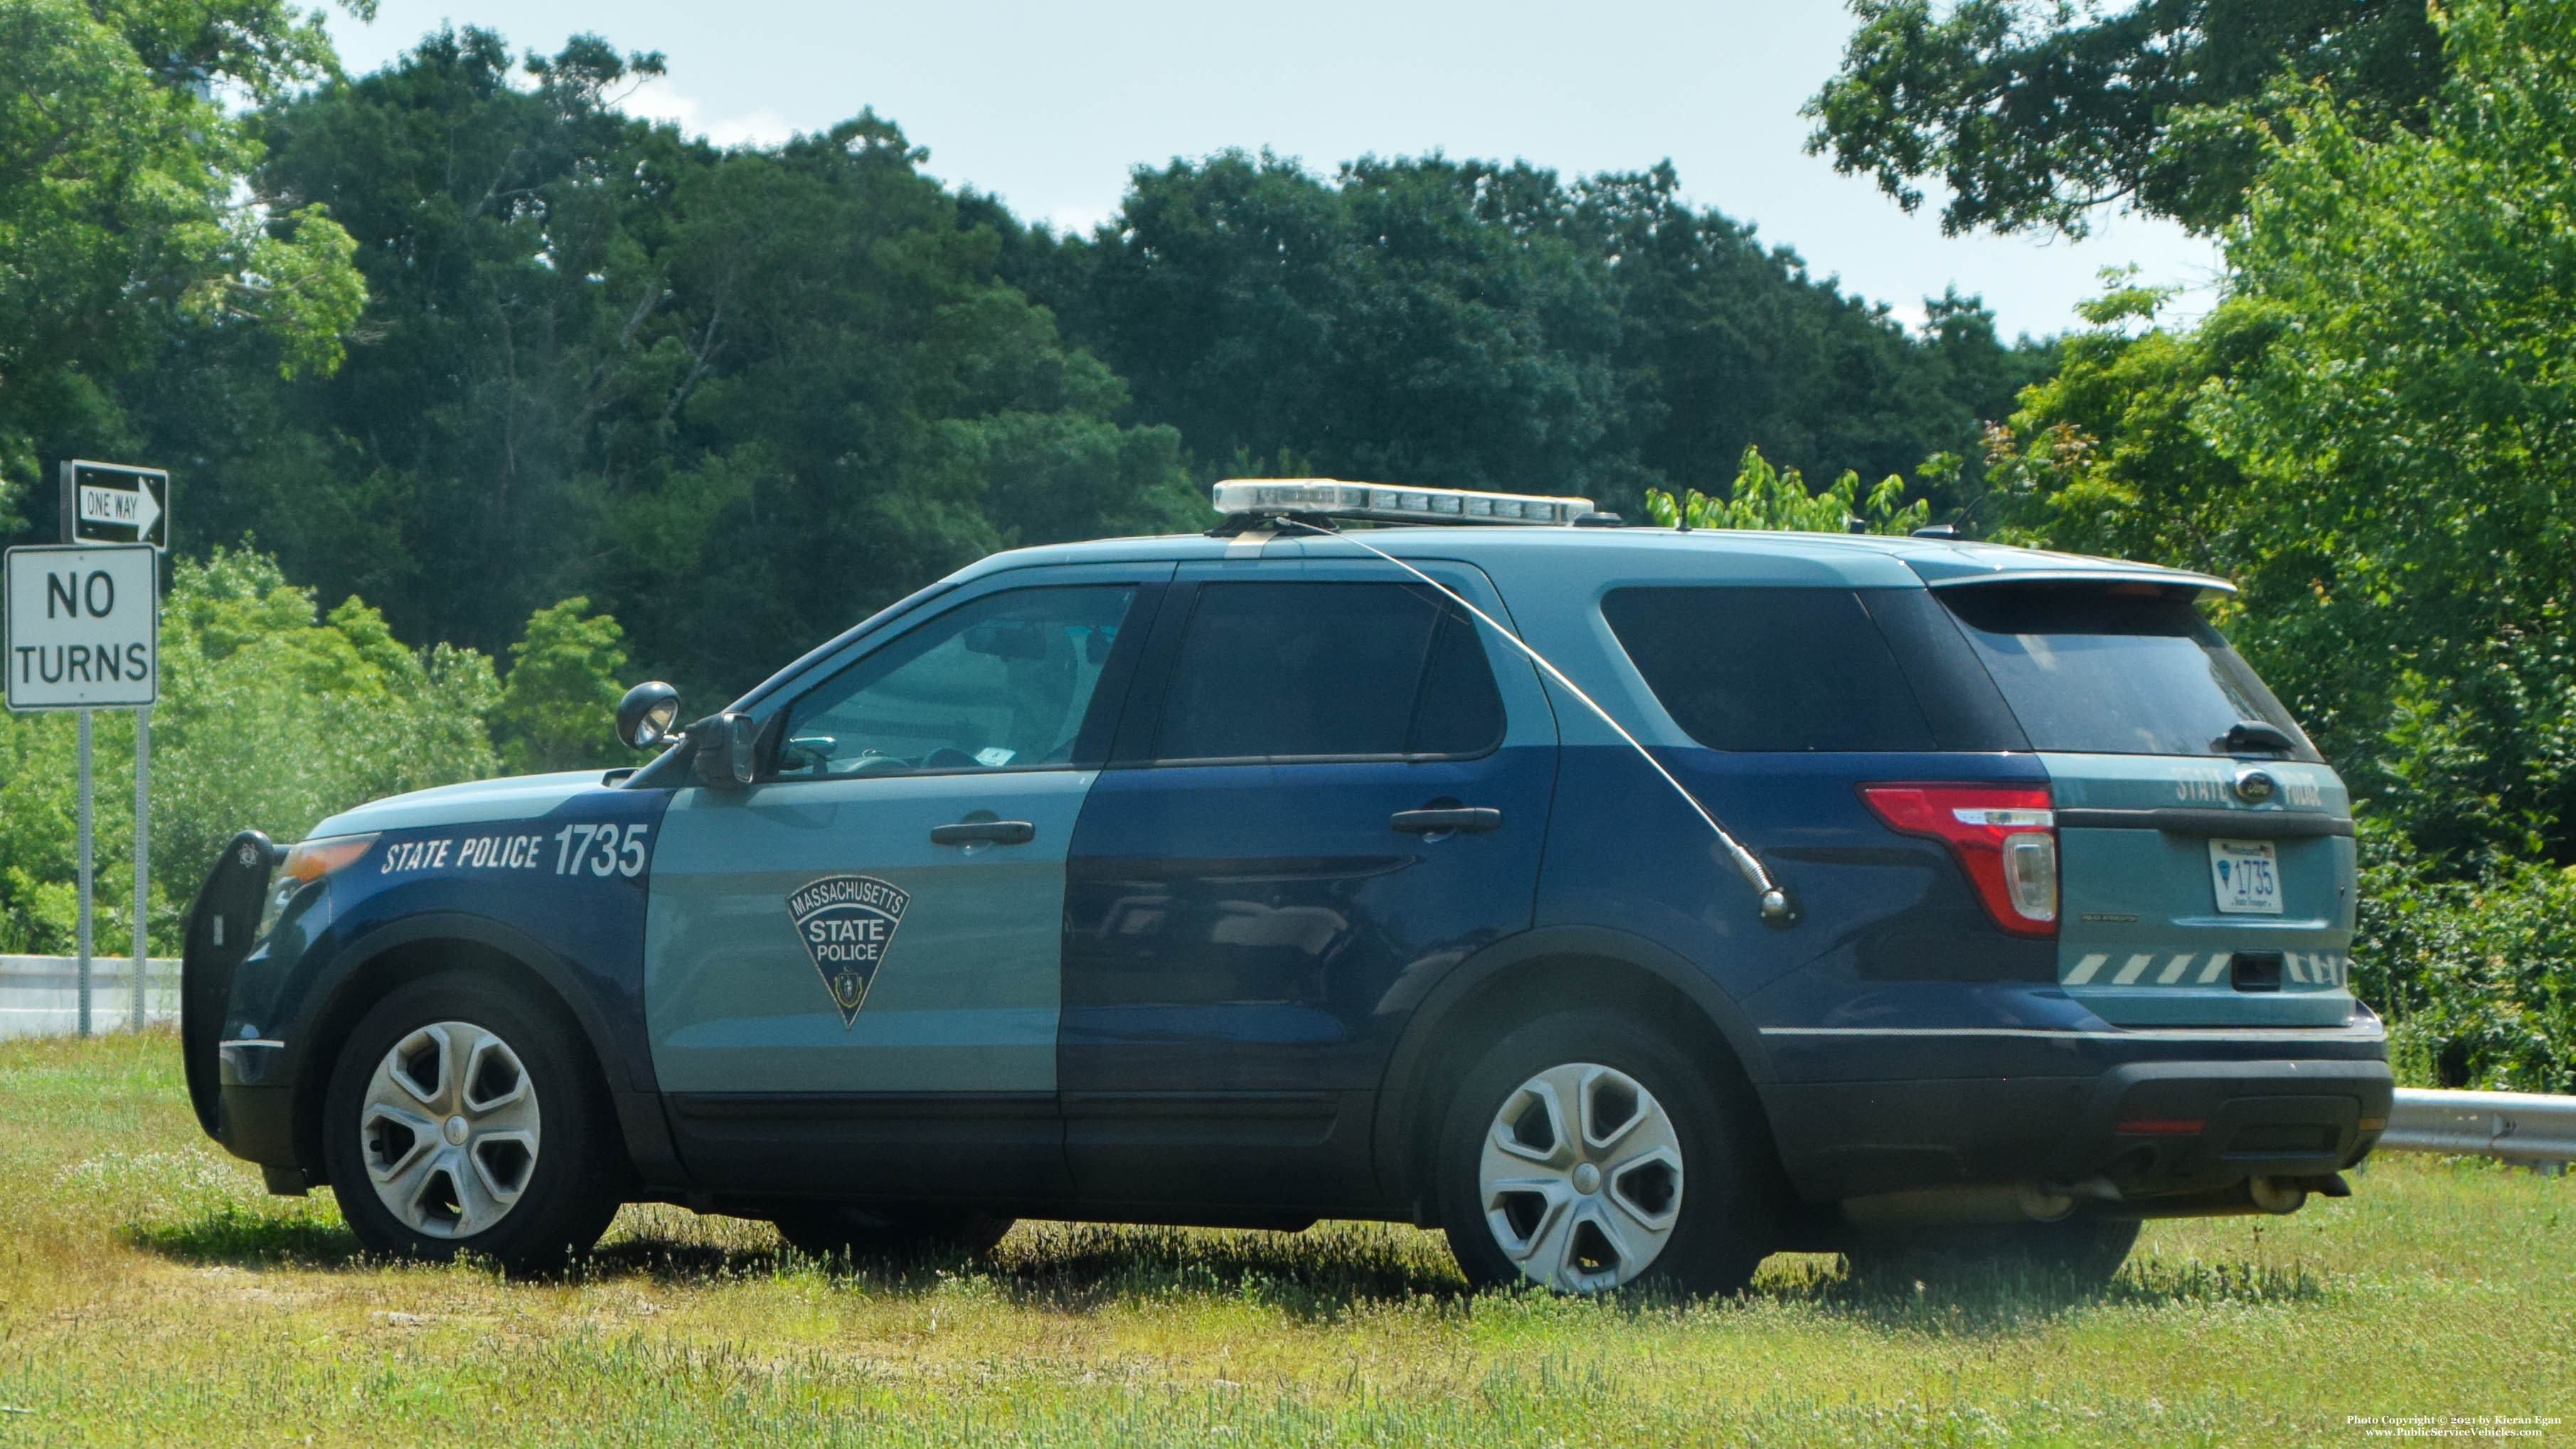 A photo  of Massachusetts State Police
            Cruiser 1735, a 2014 Ford Police Interceptor Utility             taken by Kieran Egan